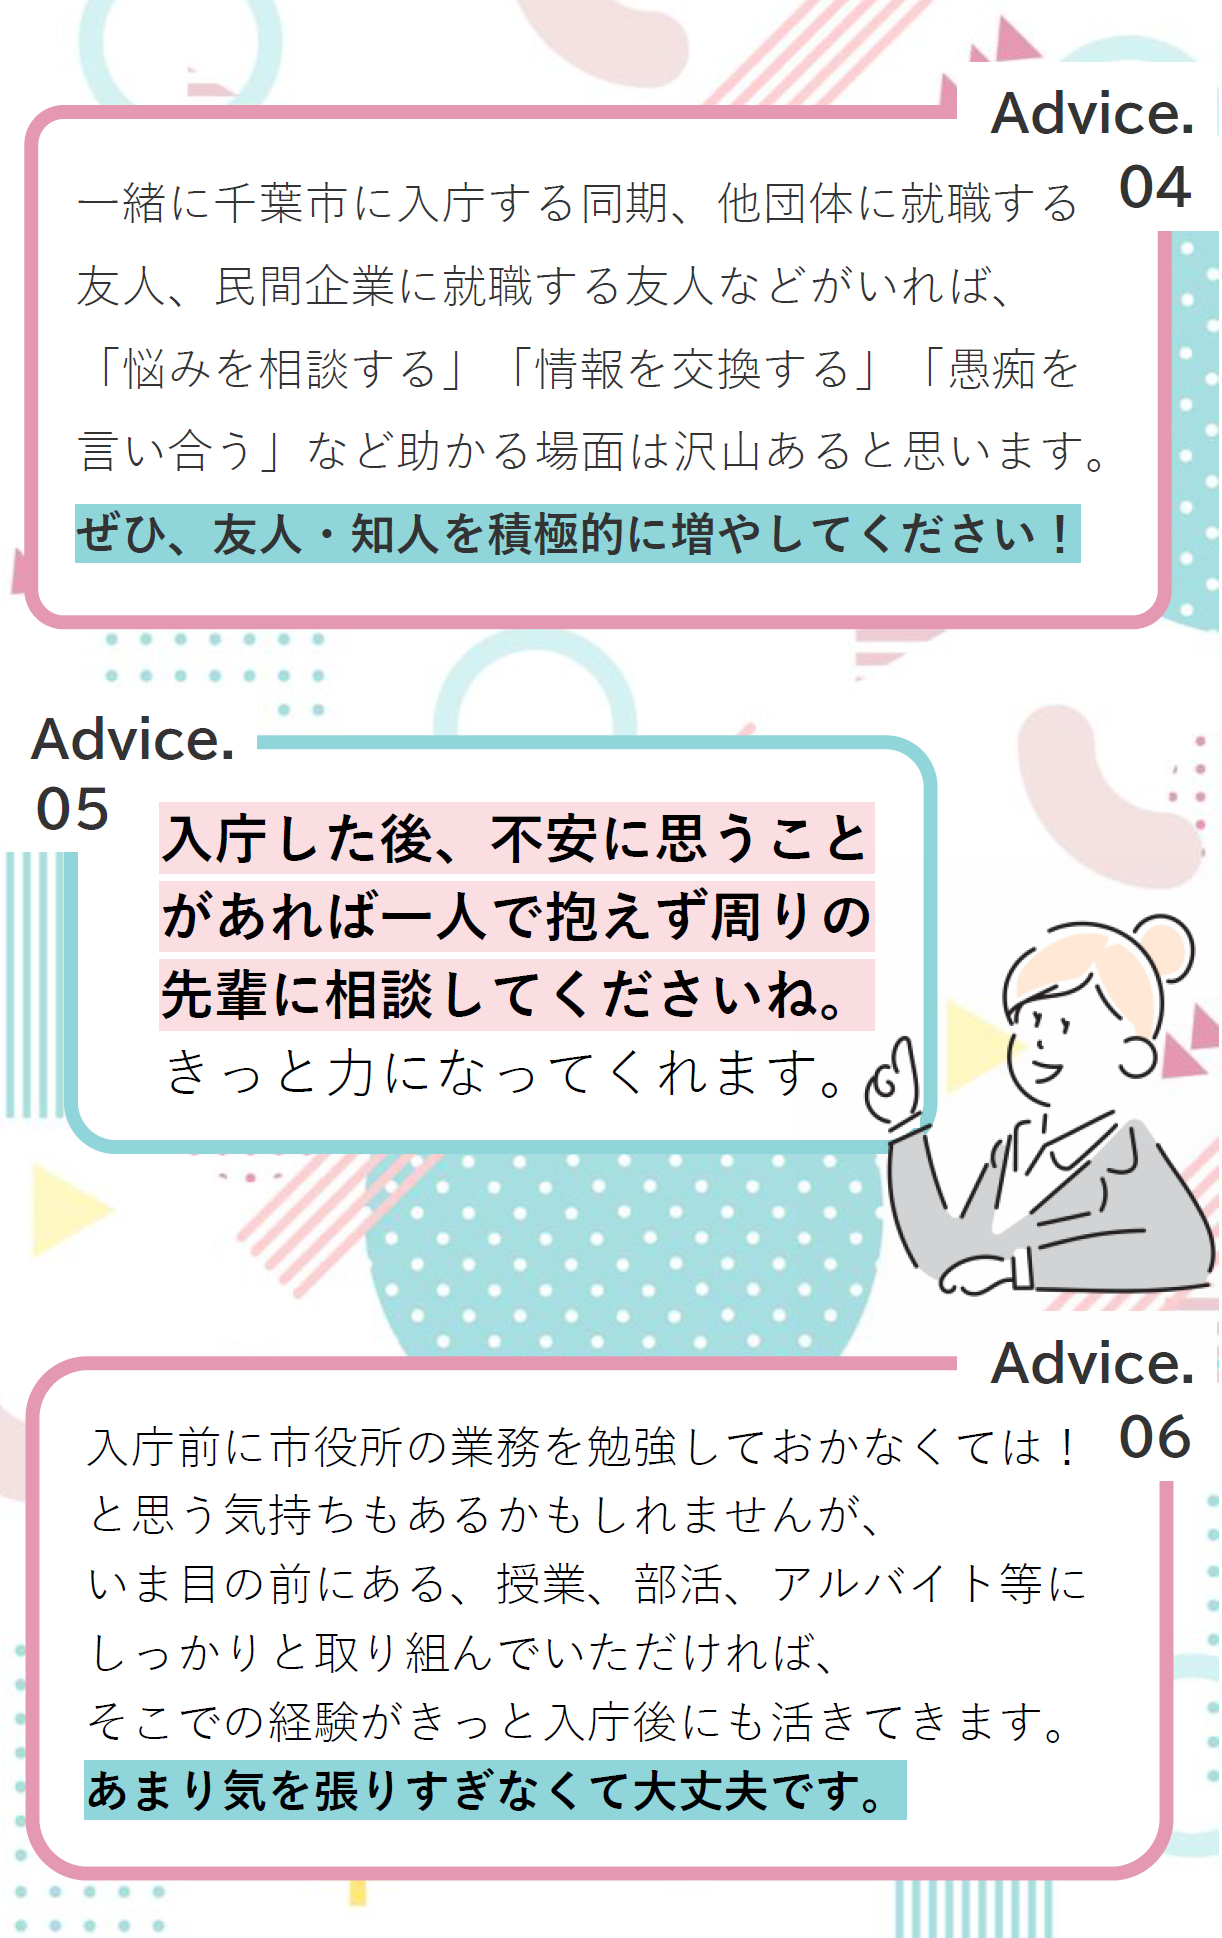 advice-02